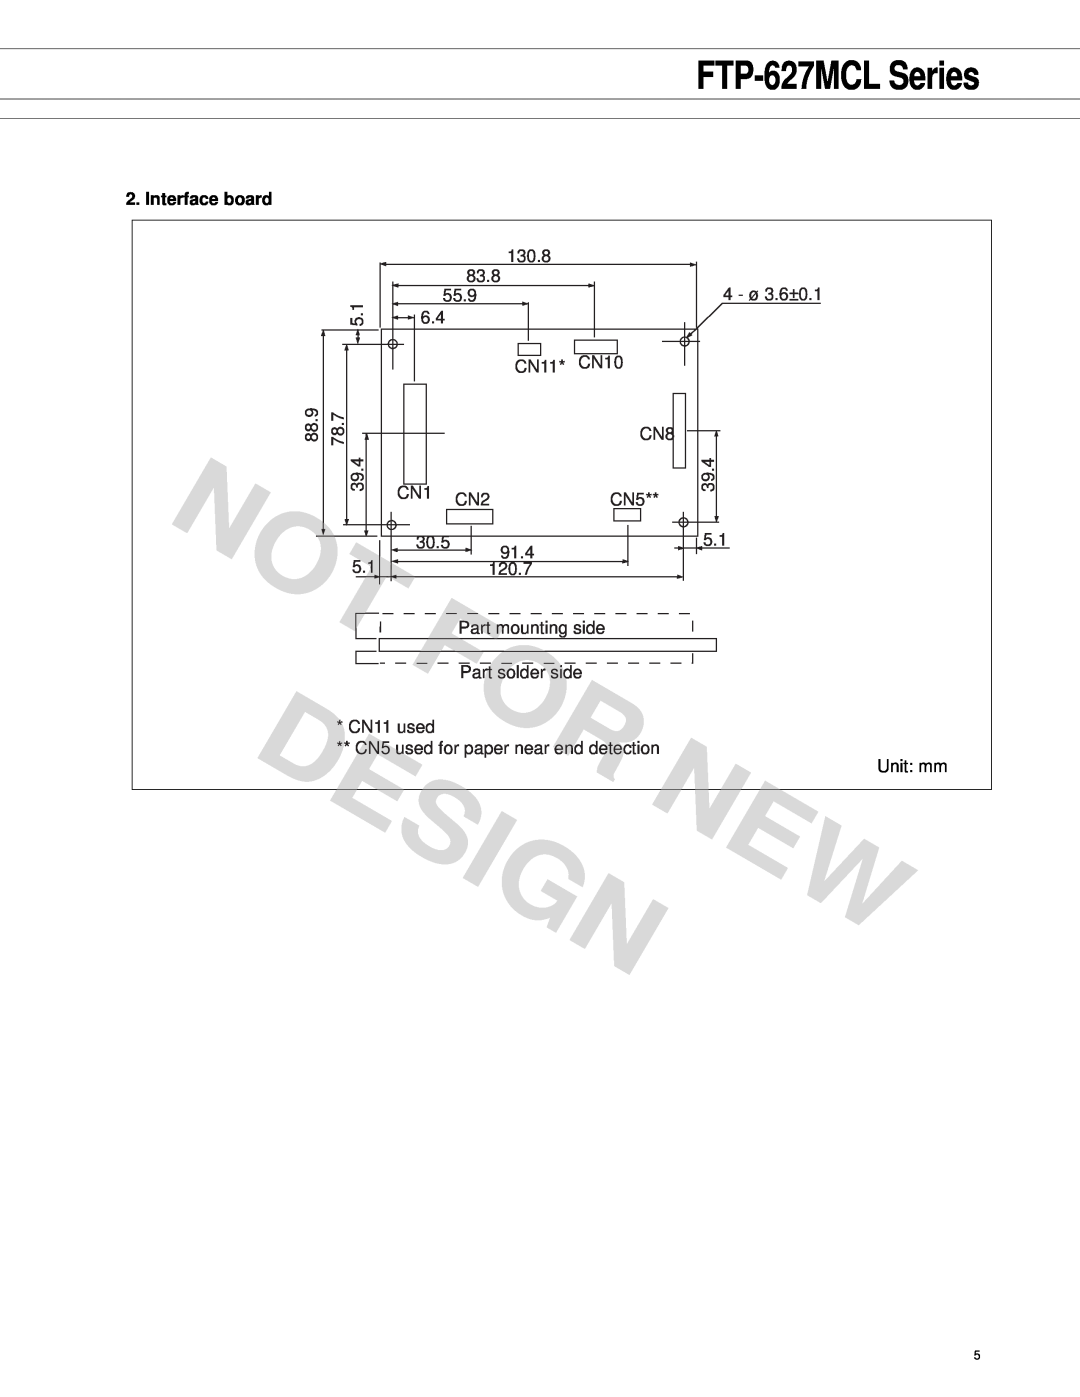 Fujitsu FTP-627 Series manual FTP-627MCL Series, Interface board 